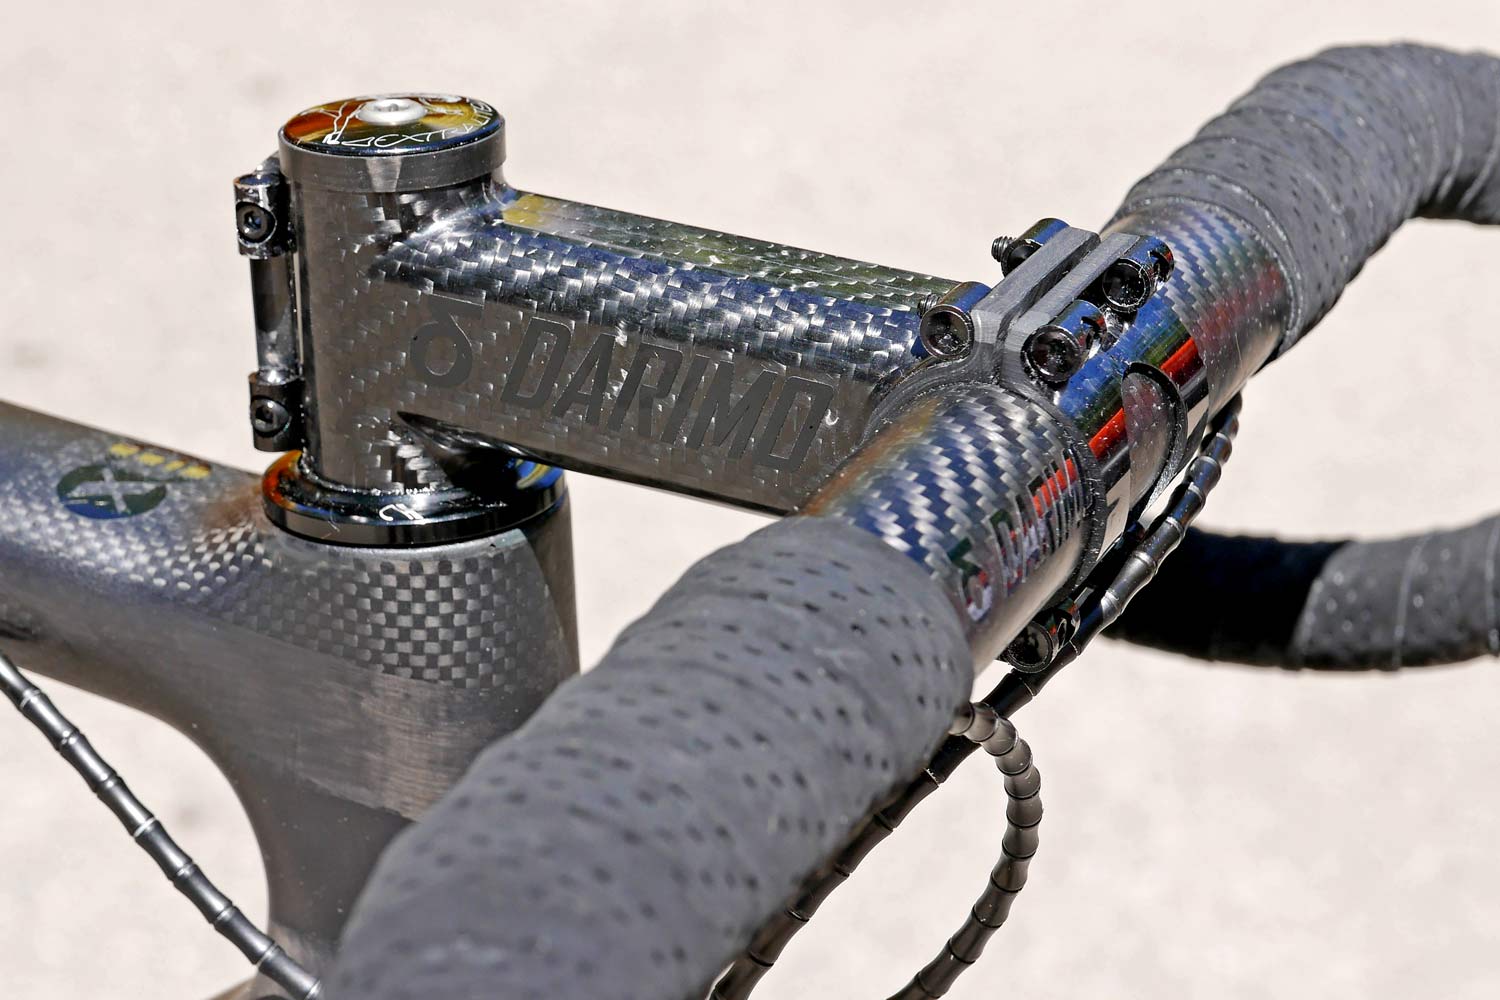 Darimo Stem ultralight lightweight handmade carbon road bike stem, made-in-Spain